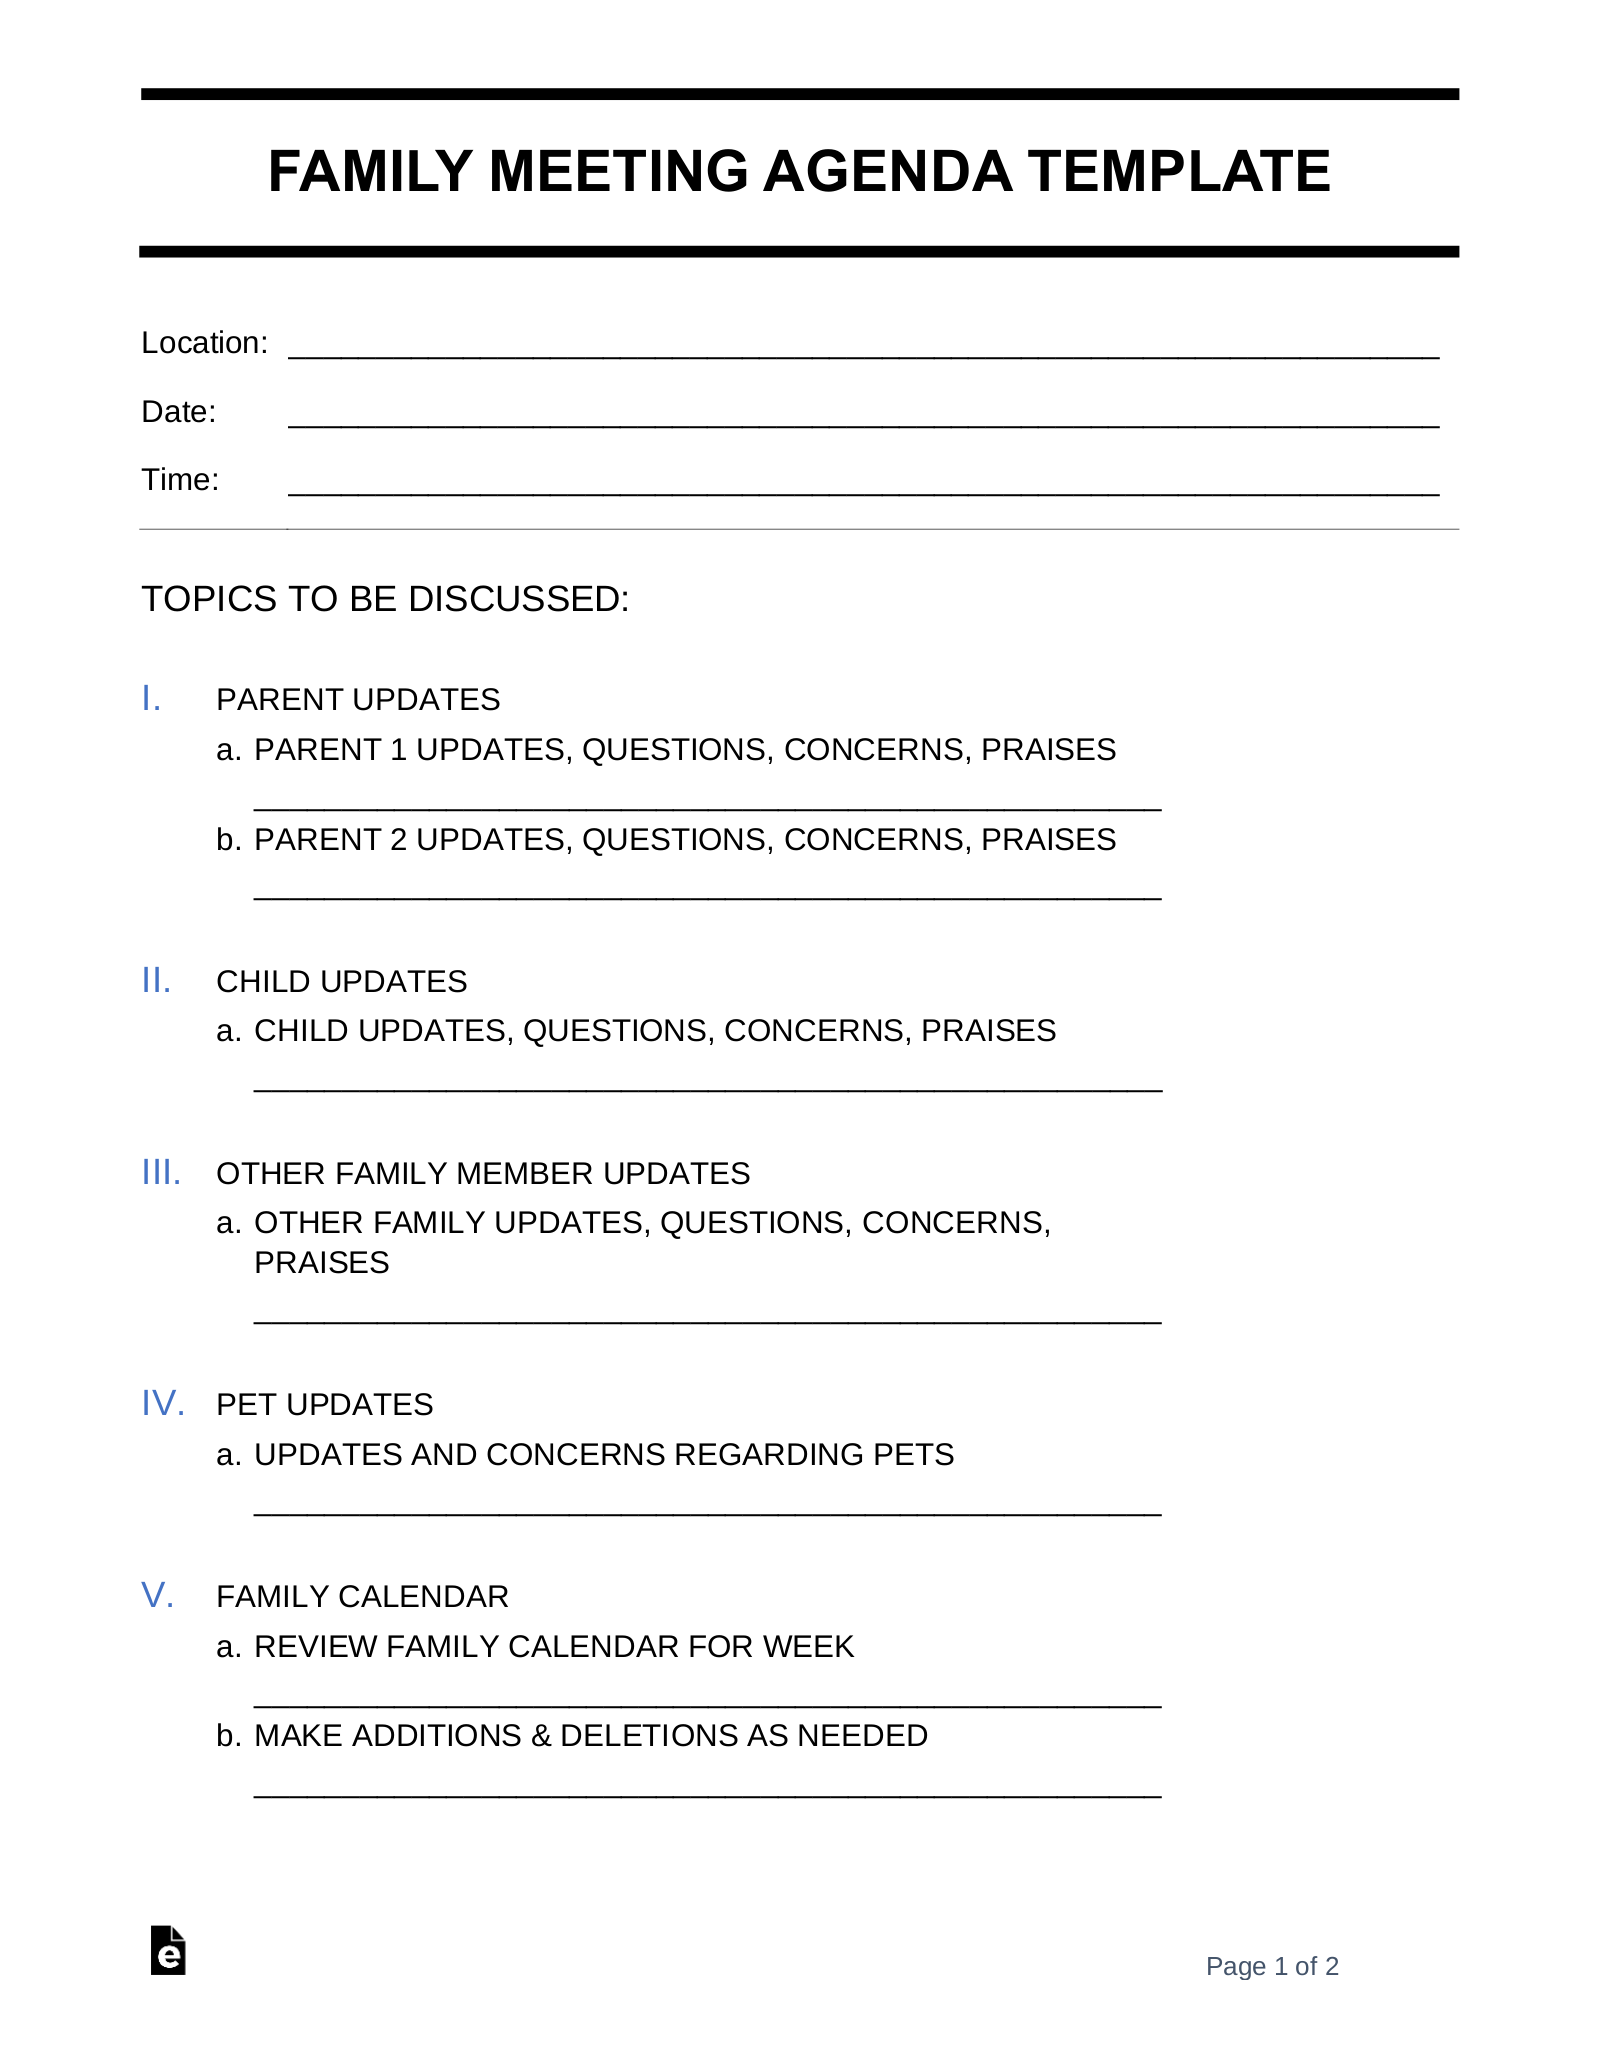 free-family-meeting-agenda-template-sample-pdf-word-eforms